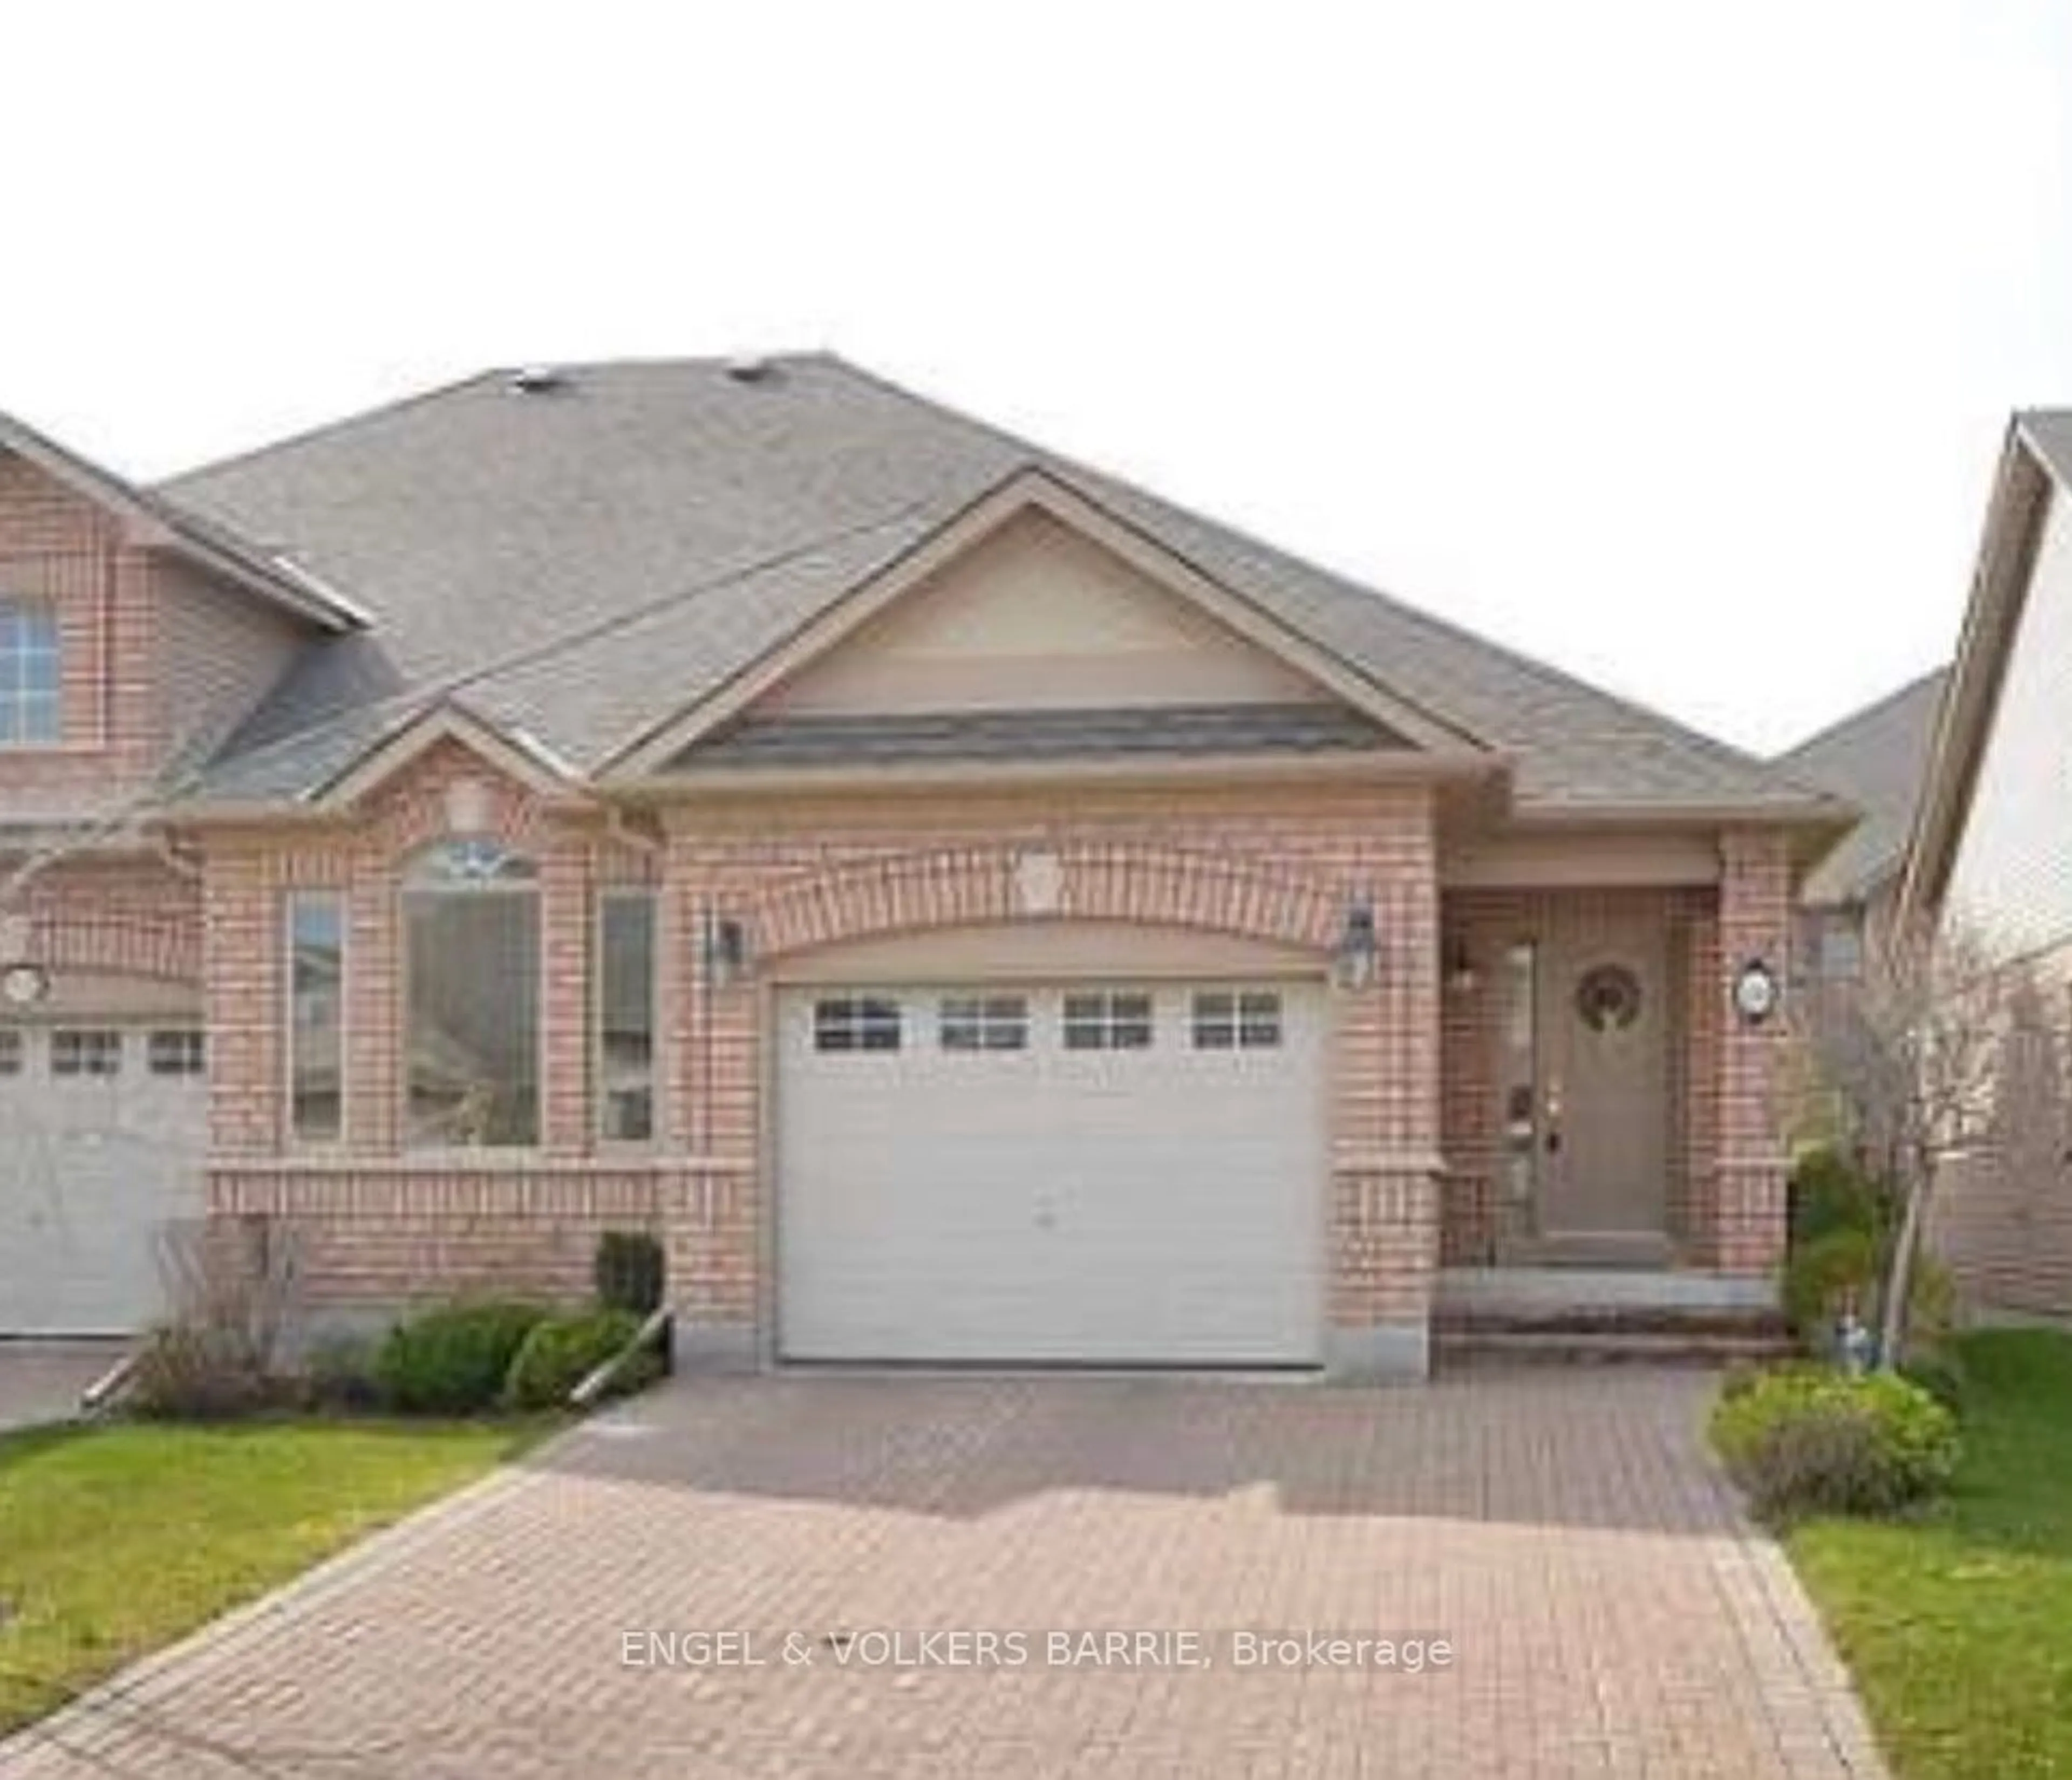 Home with brick exterior material for 150 Bella Vista Tr #28, New Tecumseth Ontario L9R 2G8